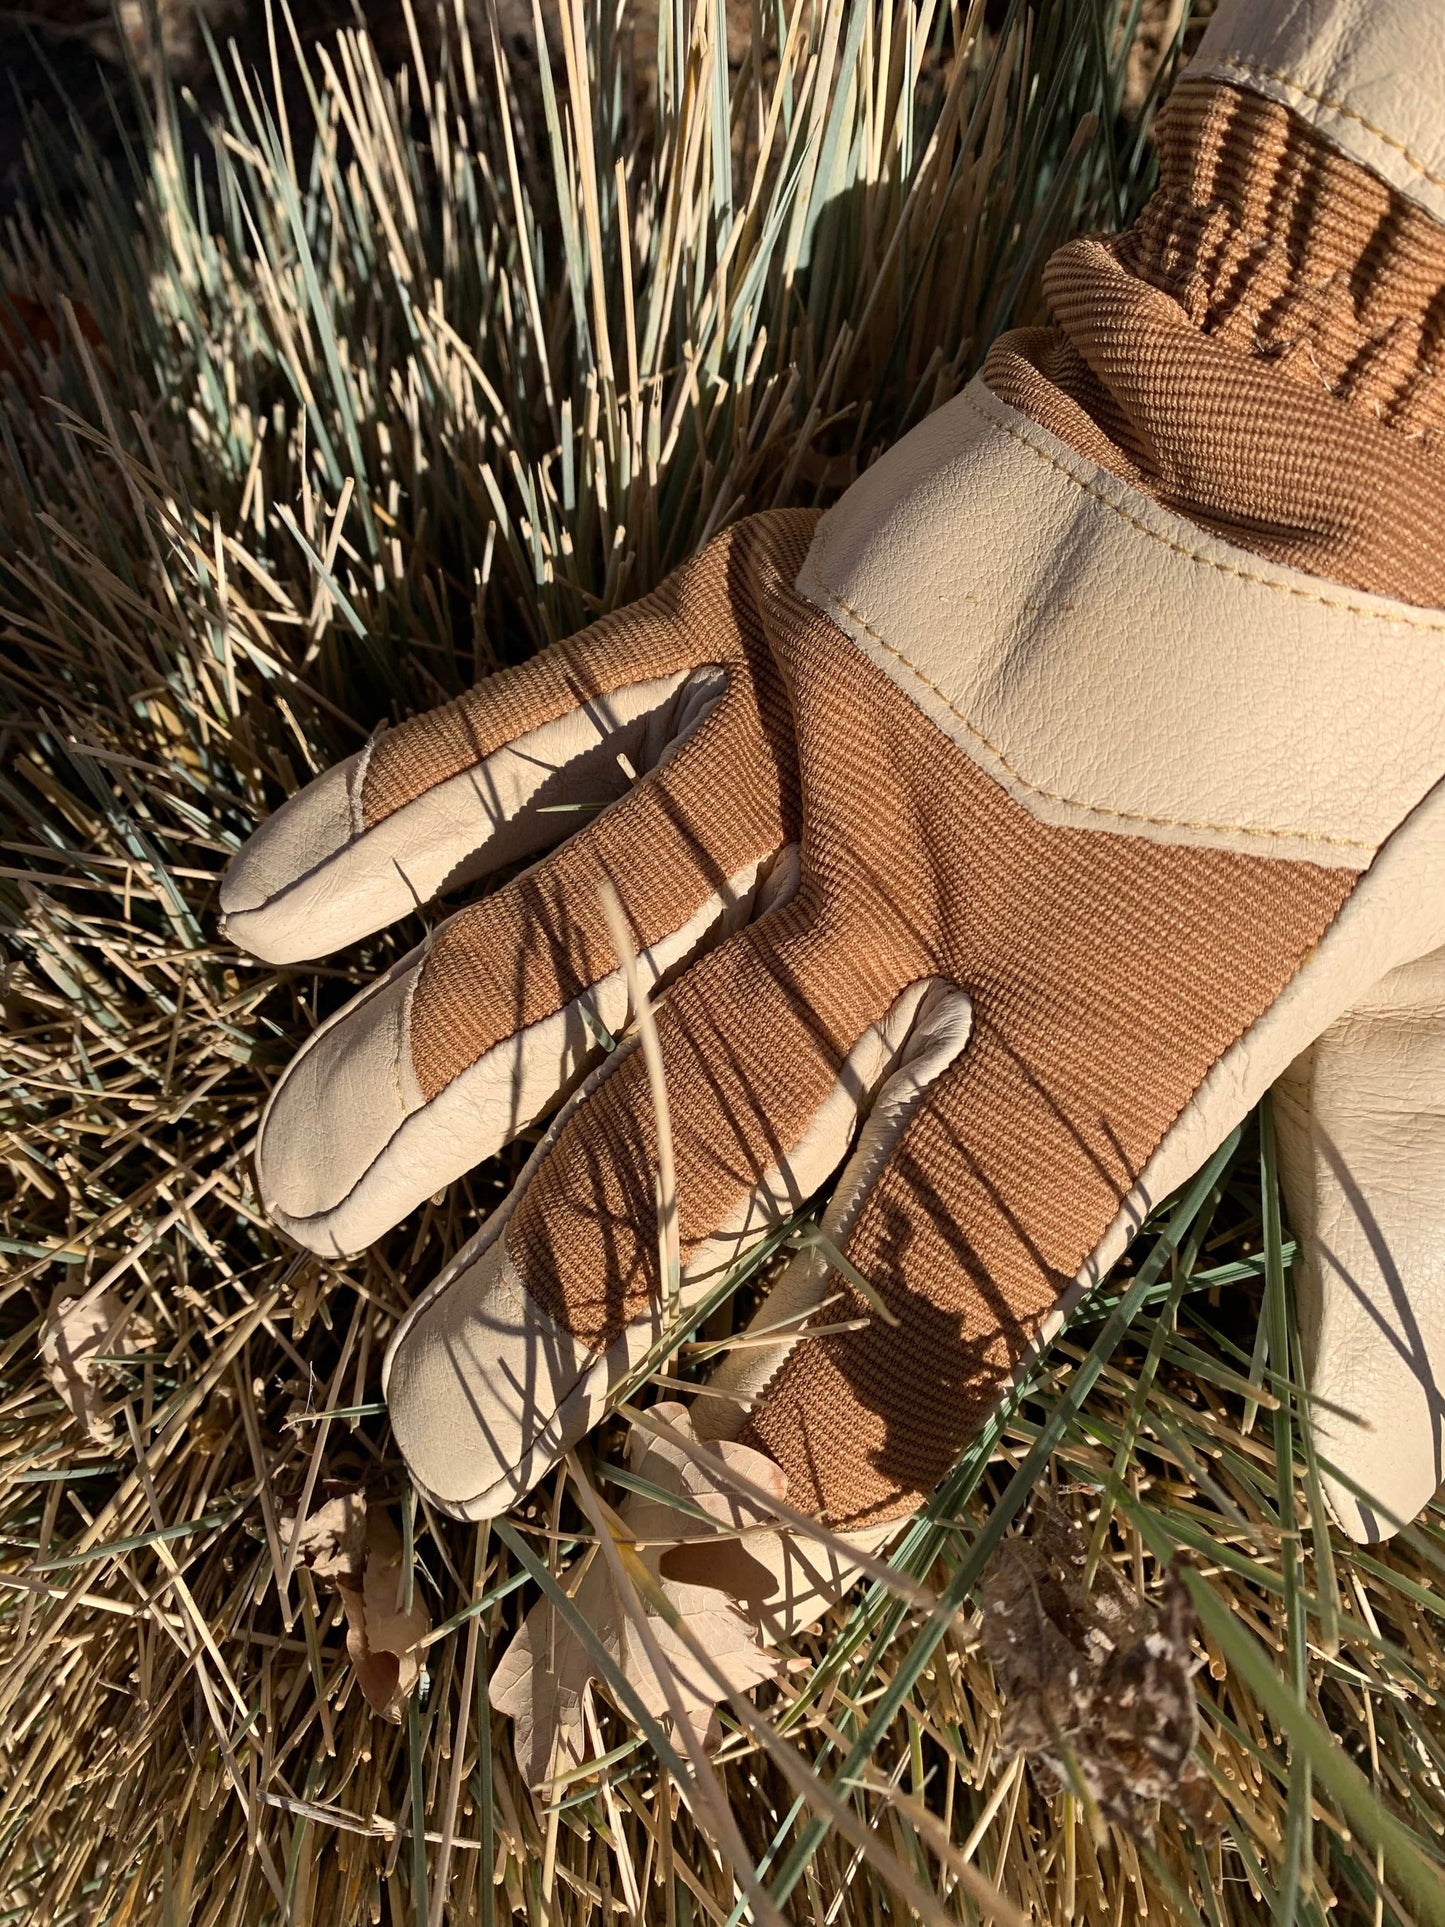 Best Gloves for Winter Work 168 Golden Stag Gloves